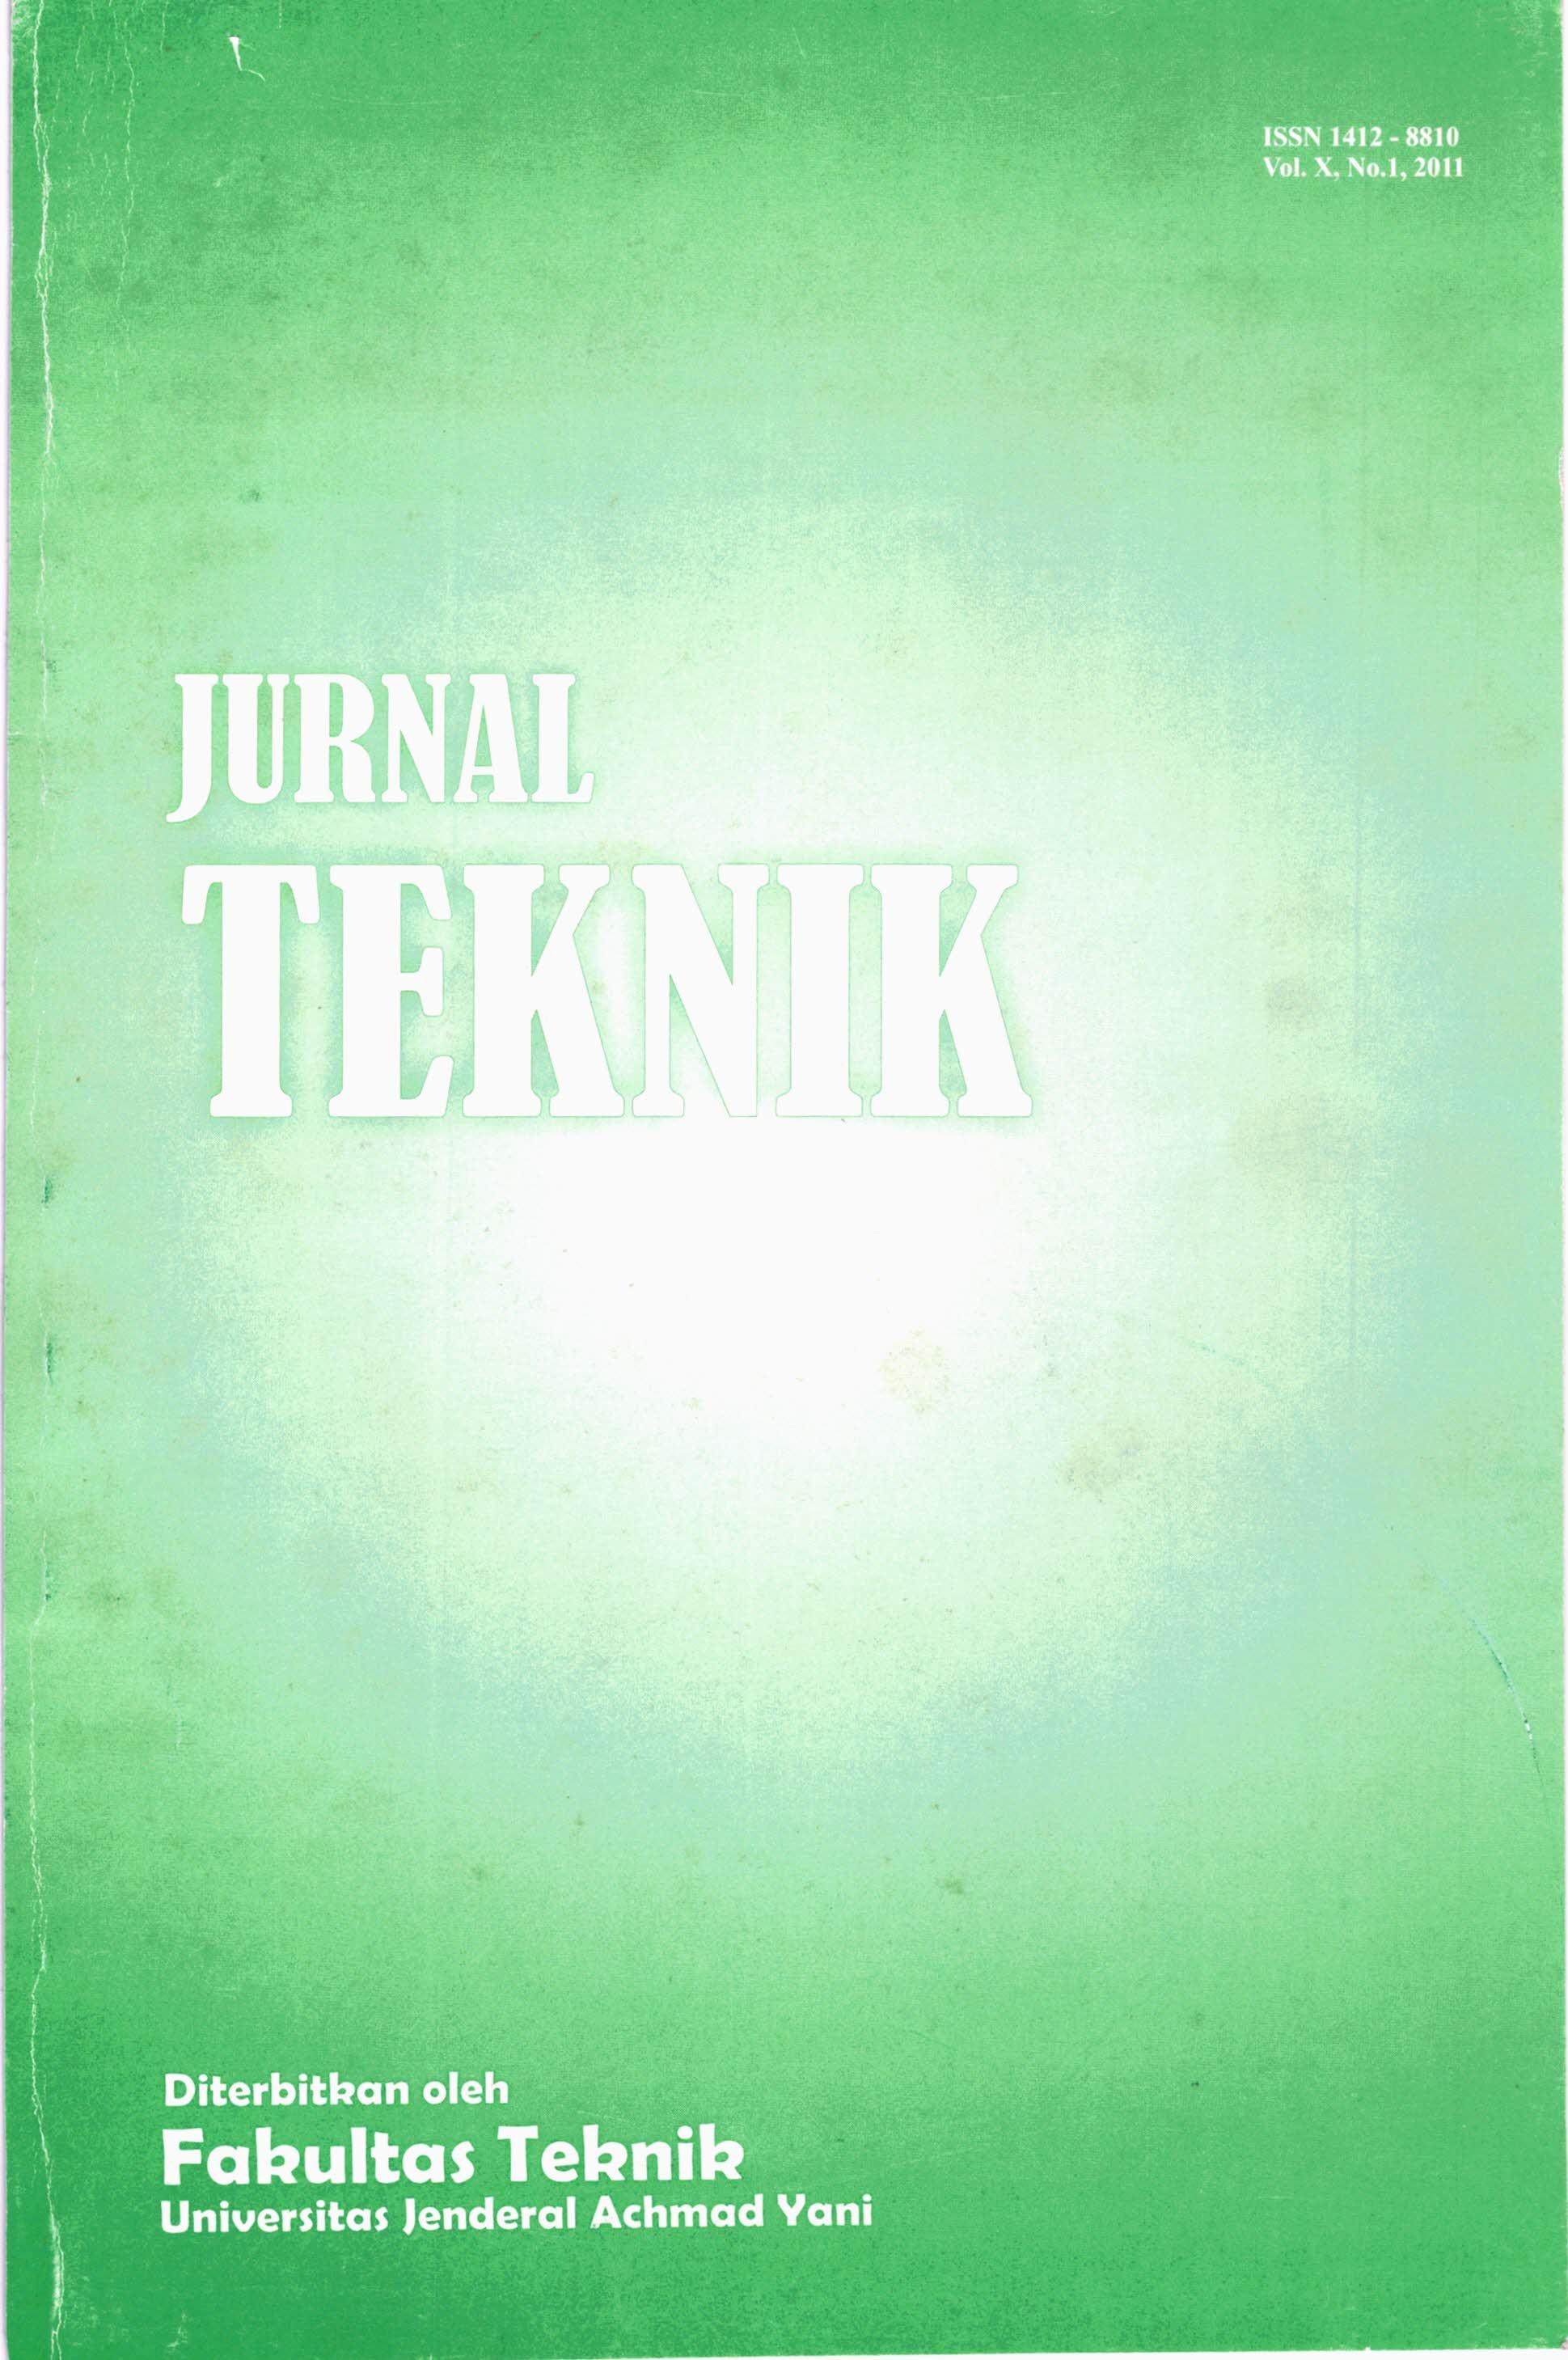 					View Vol. 10 No. 1 (2011): Jurnal Teknik - Media Pengembangan Ilmu dan Aplikasi Teknik
				